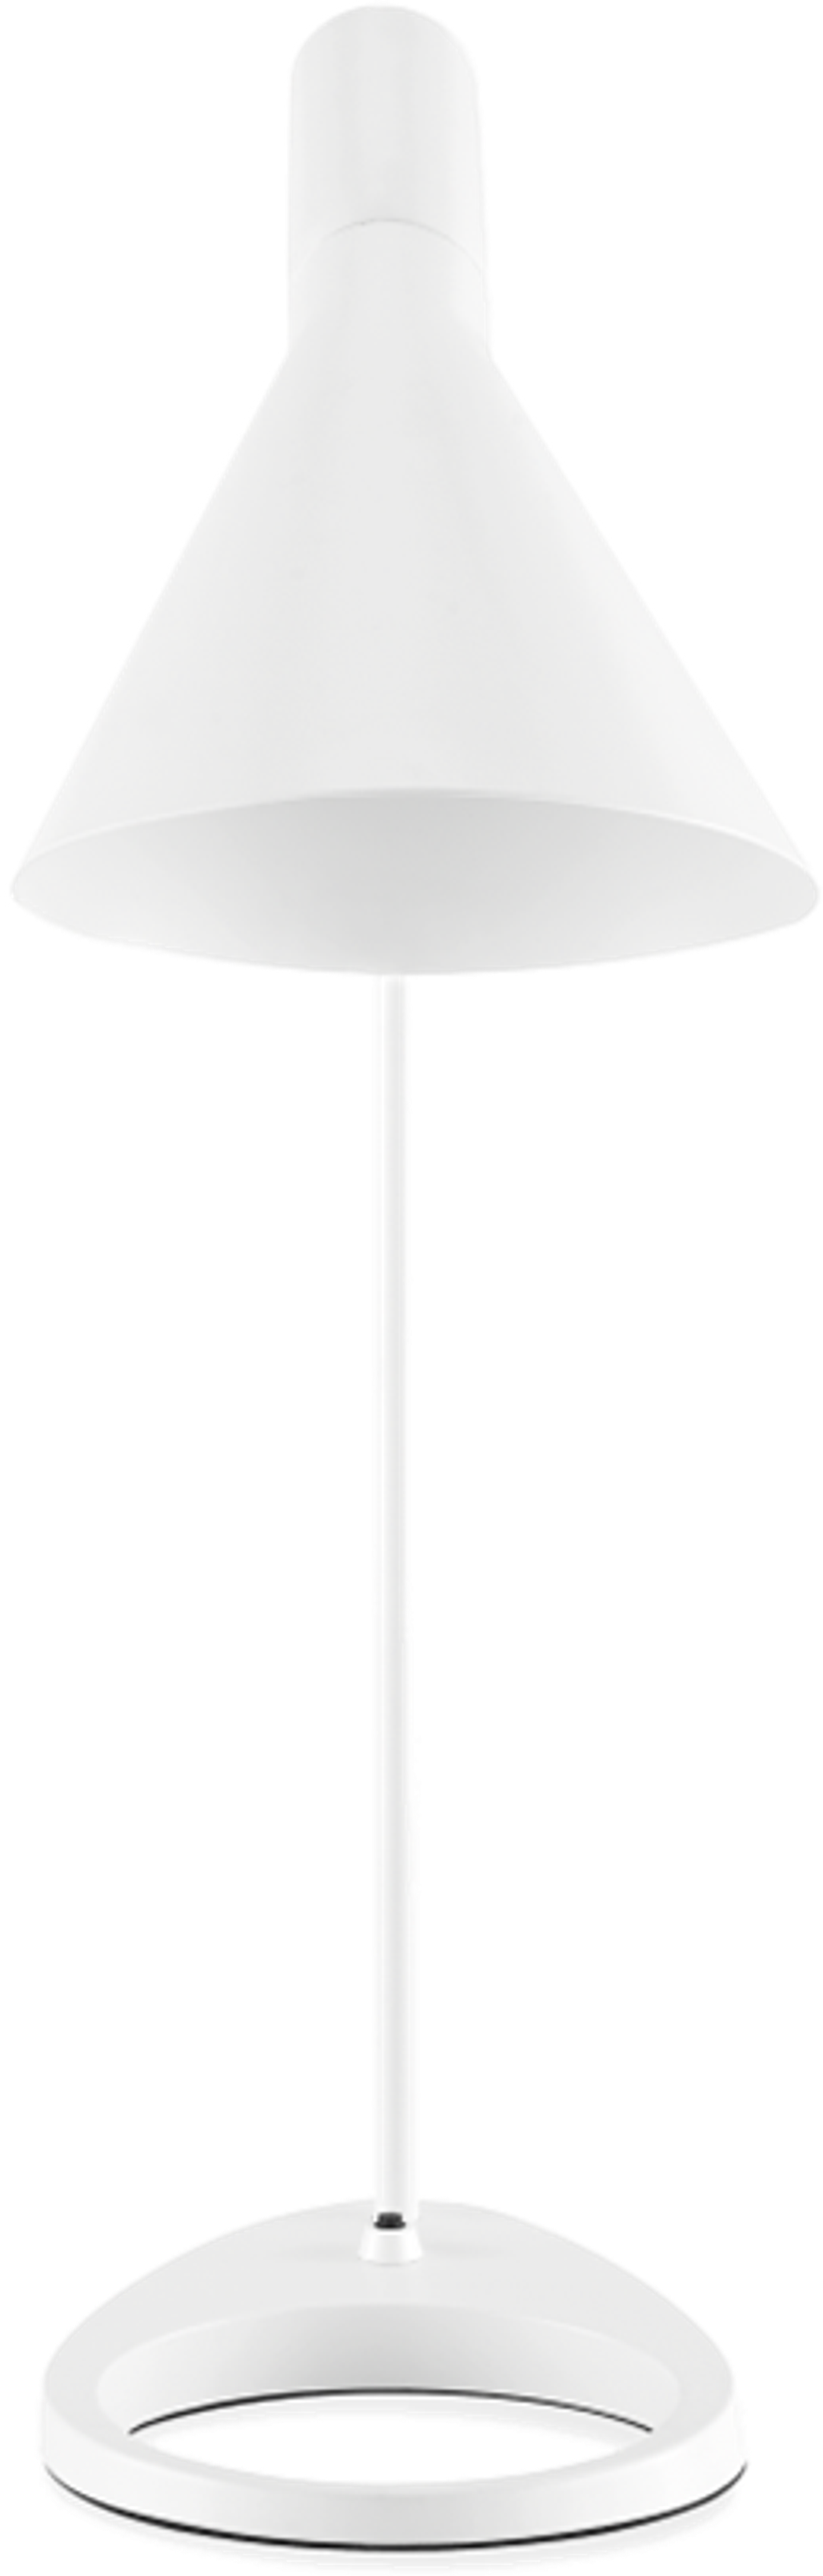 AJ Style Table Lamp White image.